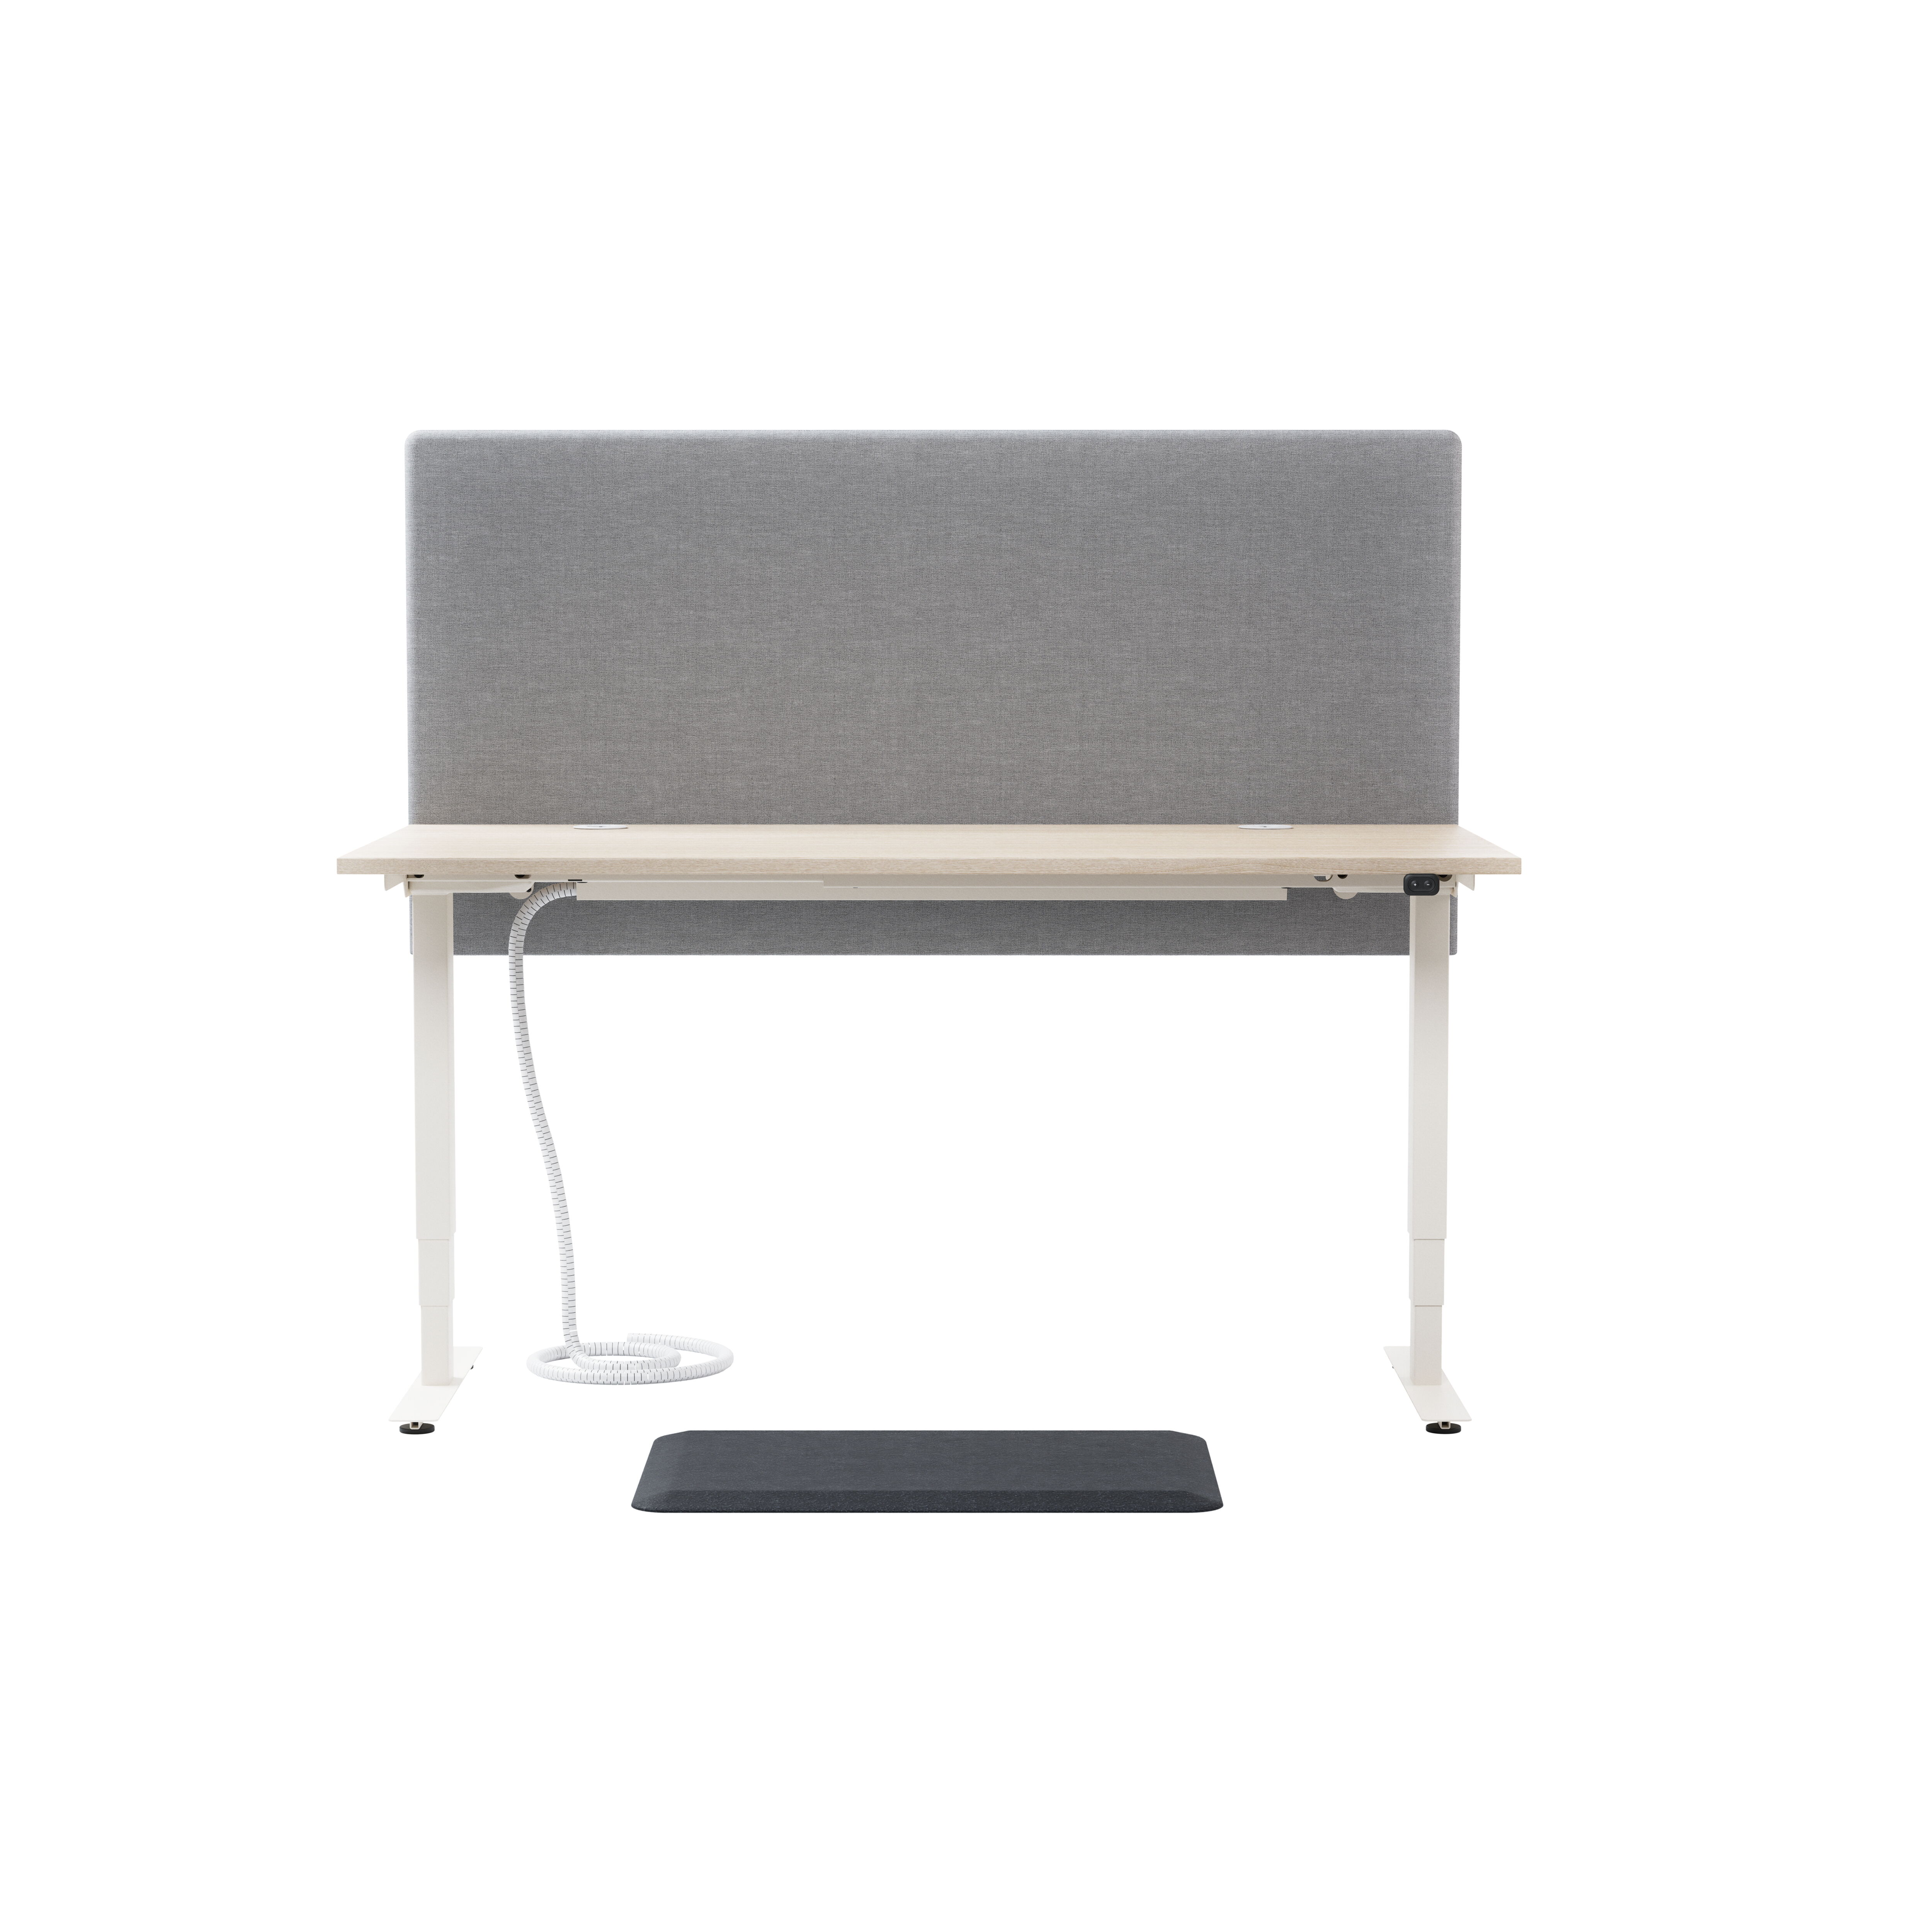 Izi Pro S Desk, sit/stand